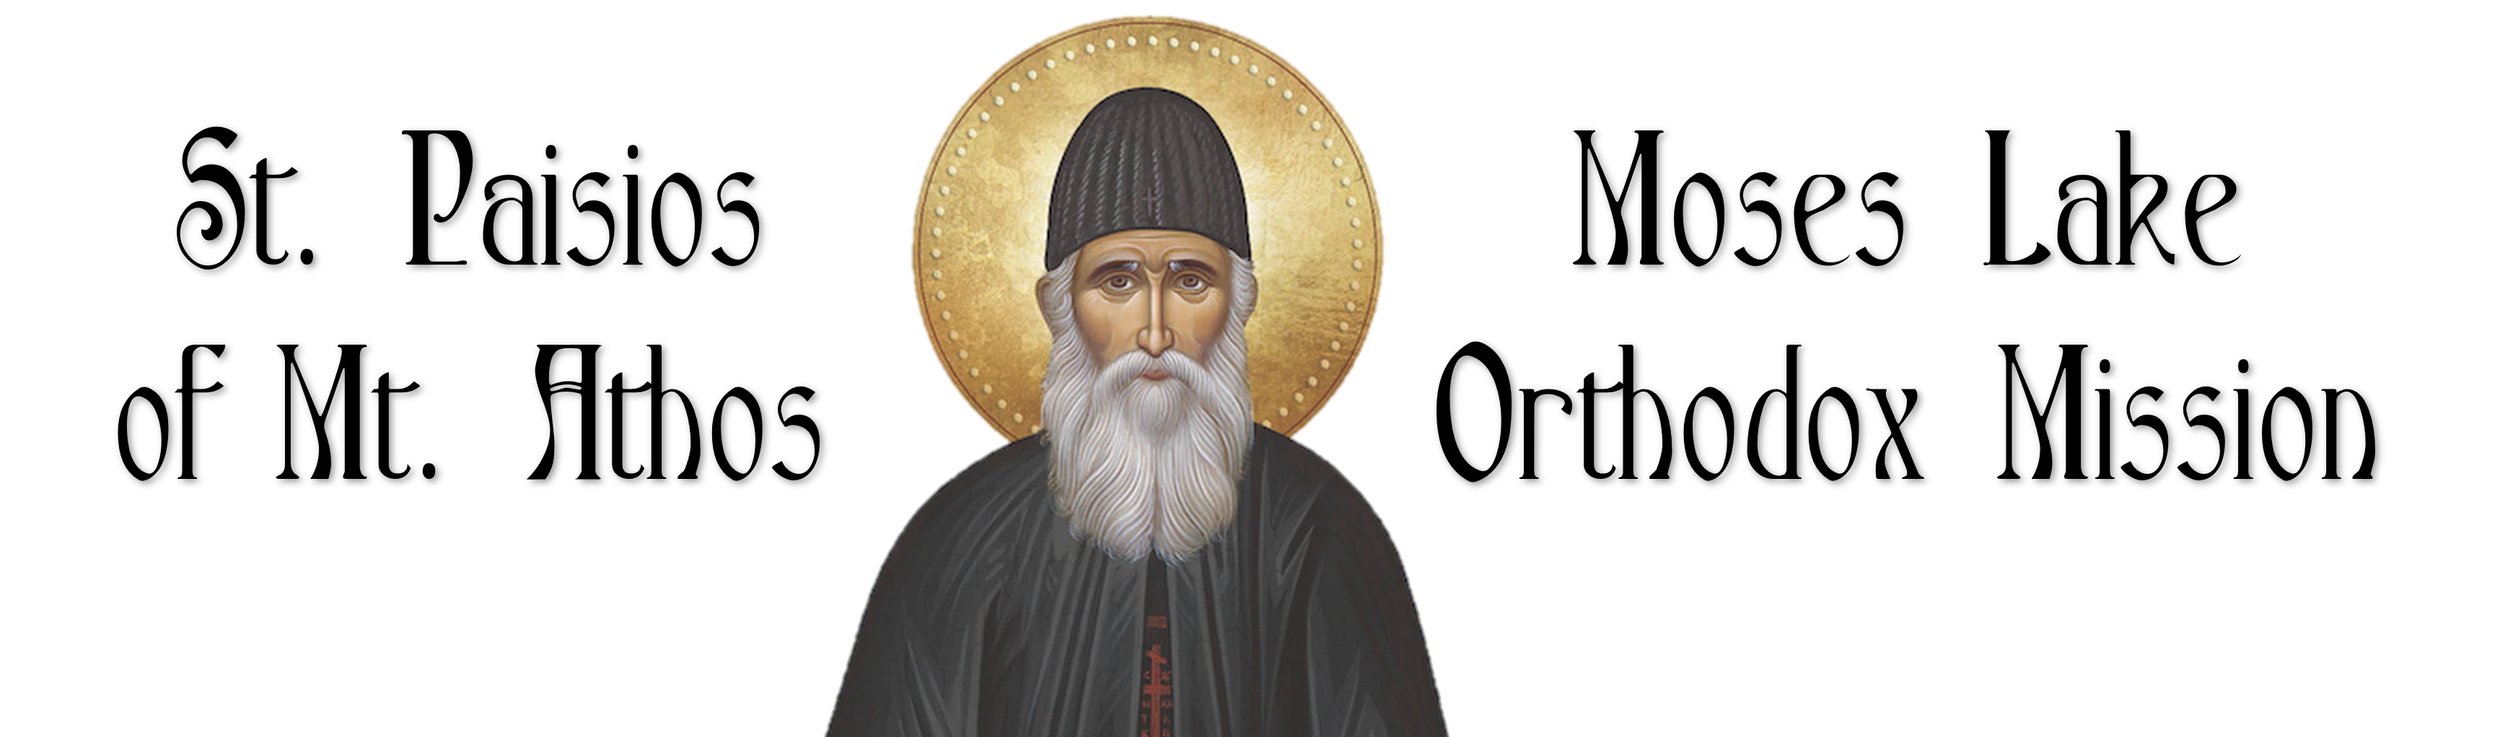 St. Paisios of Mt. Athos  Antiochian Orthodox Mission